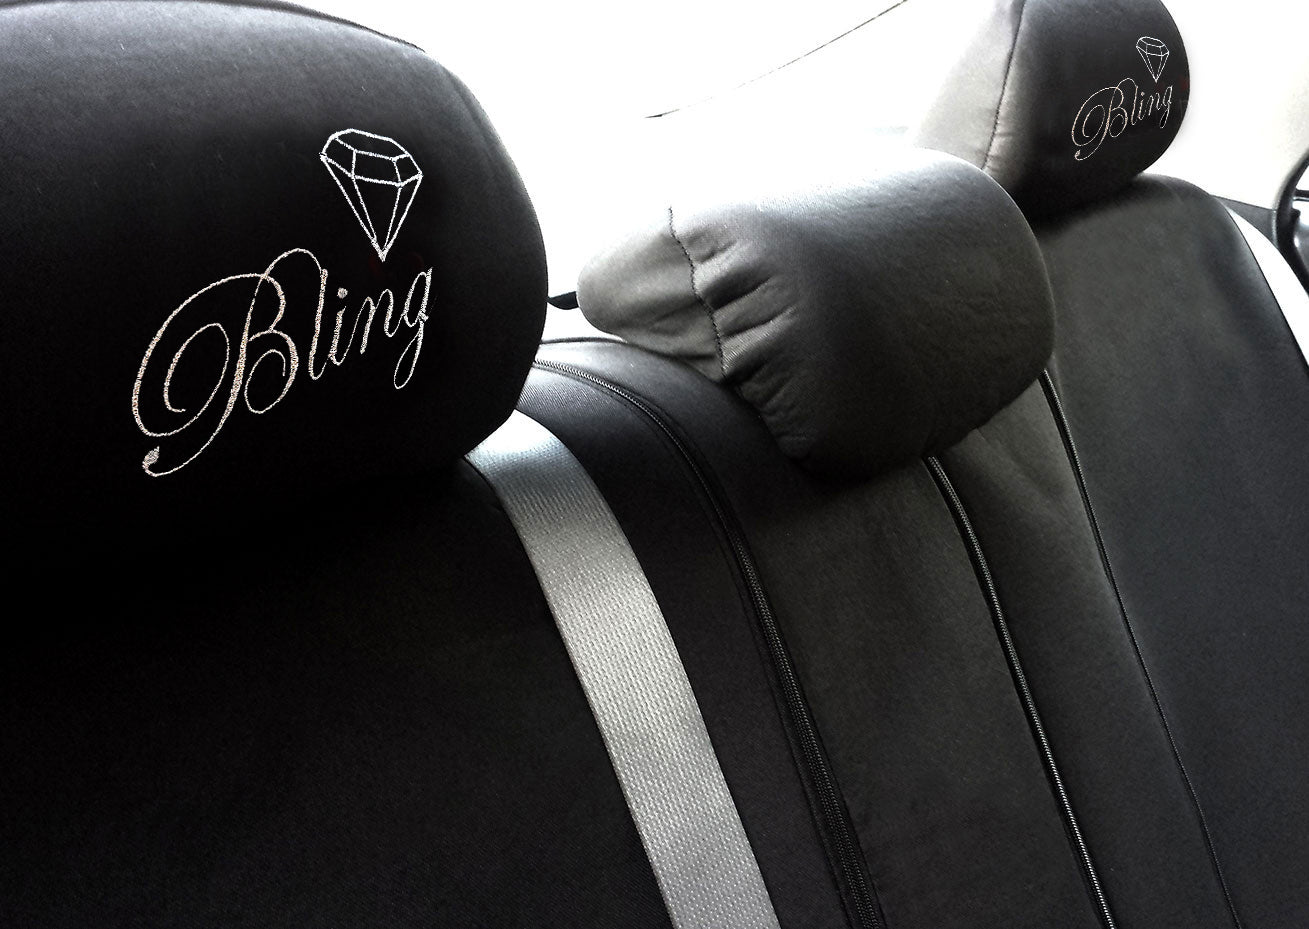 Embroidery Silver Glitter Bling Logo Design Auto Truck SUV Car Seat Headrest Cover Accessory 1 Pair - Yupbizauto